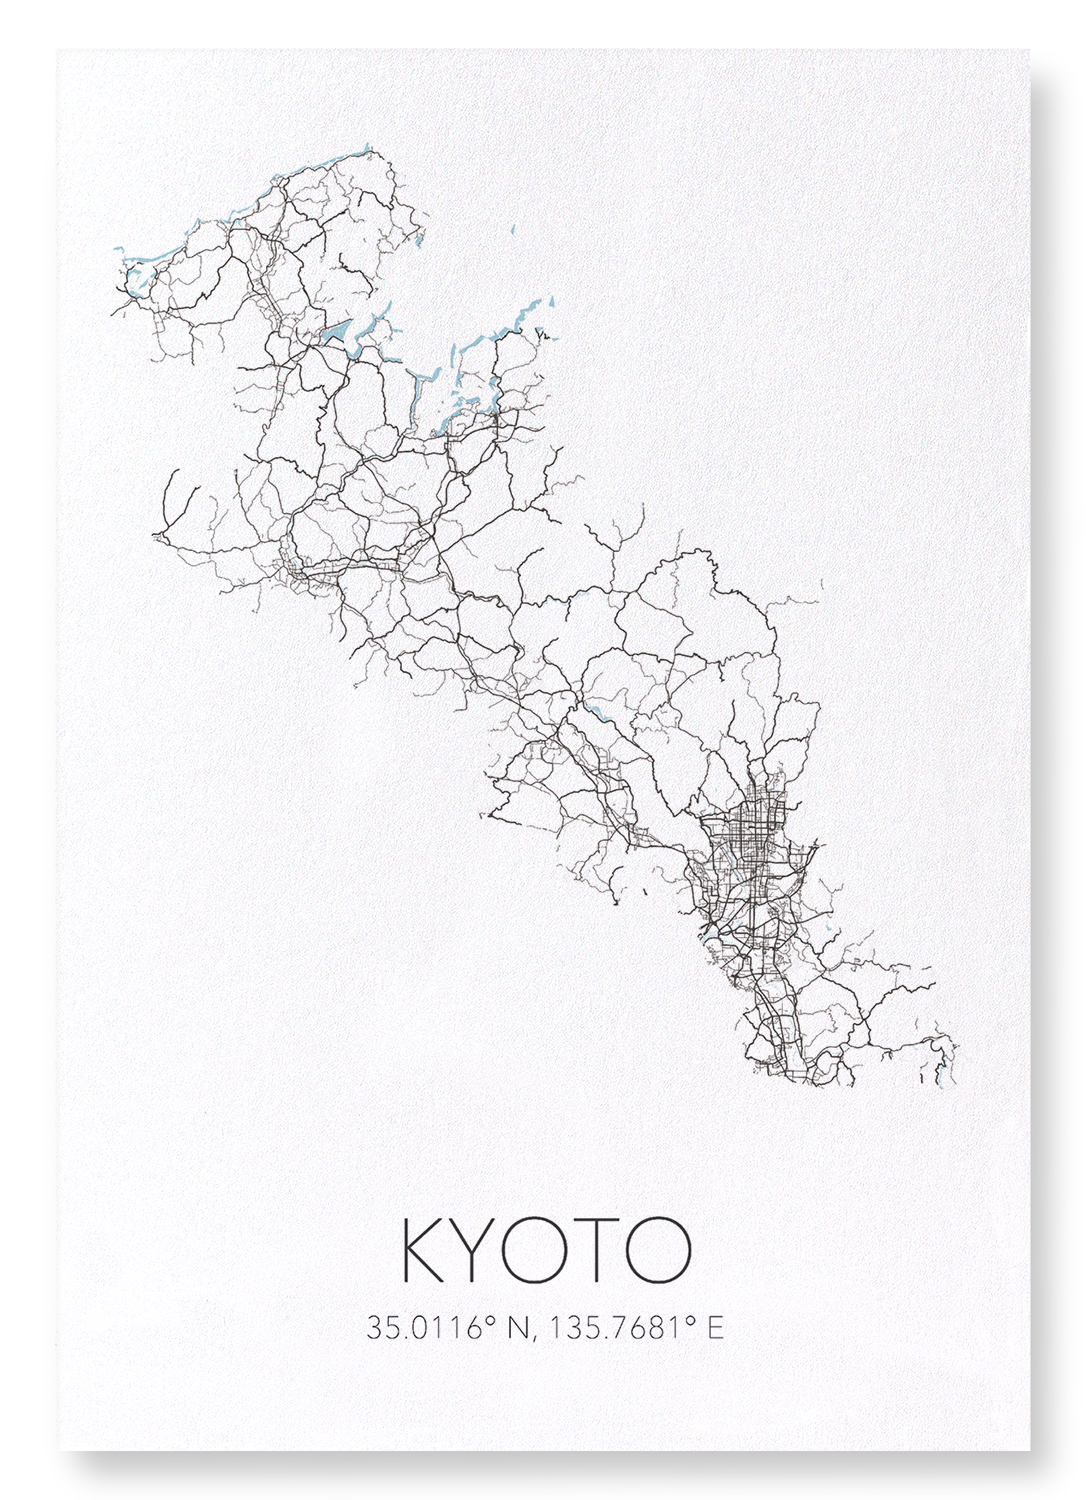 KYOTO CUTOUT: Map Cutout Art Print